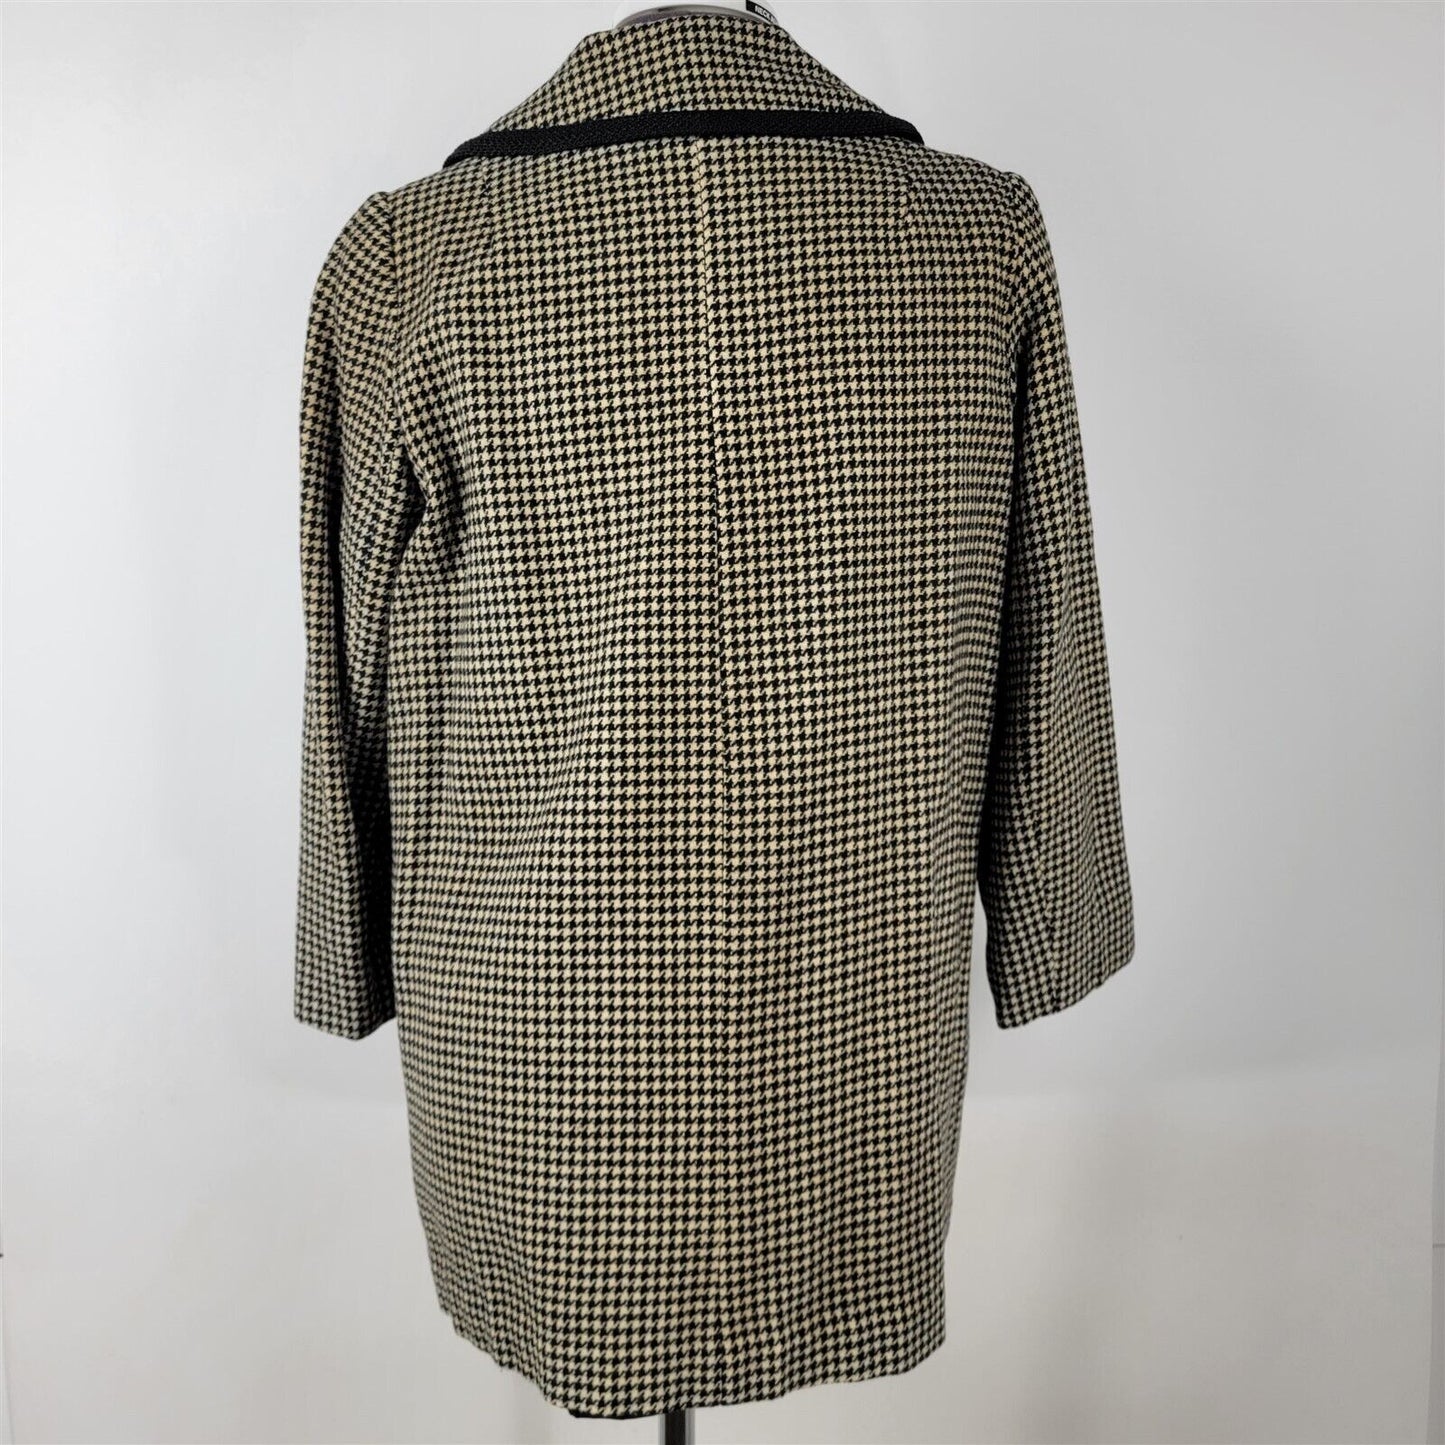 Vintage 1960s Black & Cream Wool 3/4 Length Coat Womens Size L